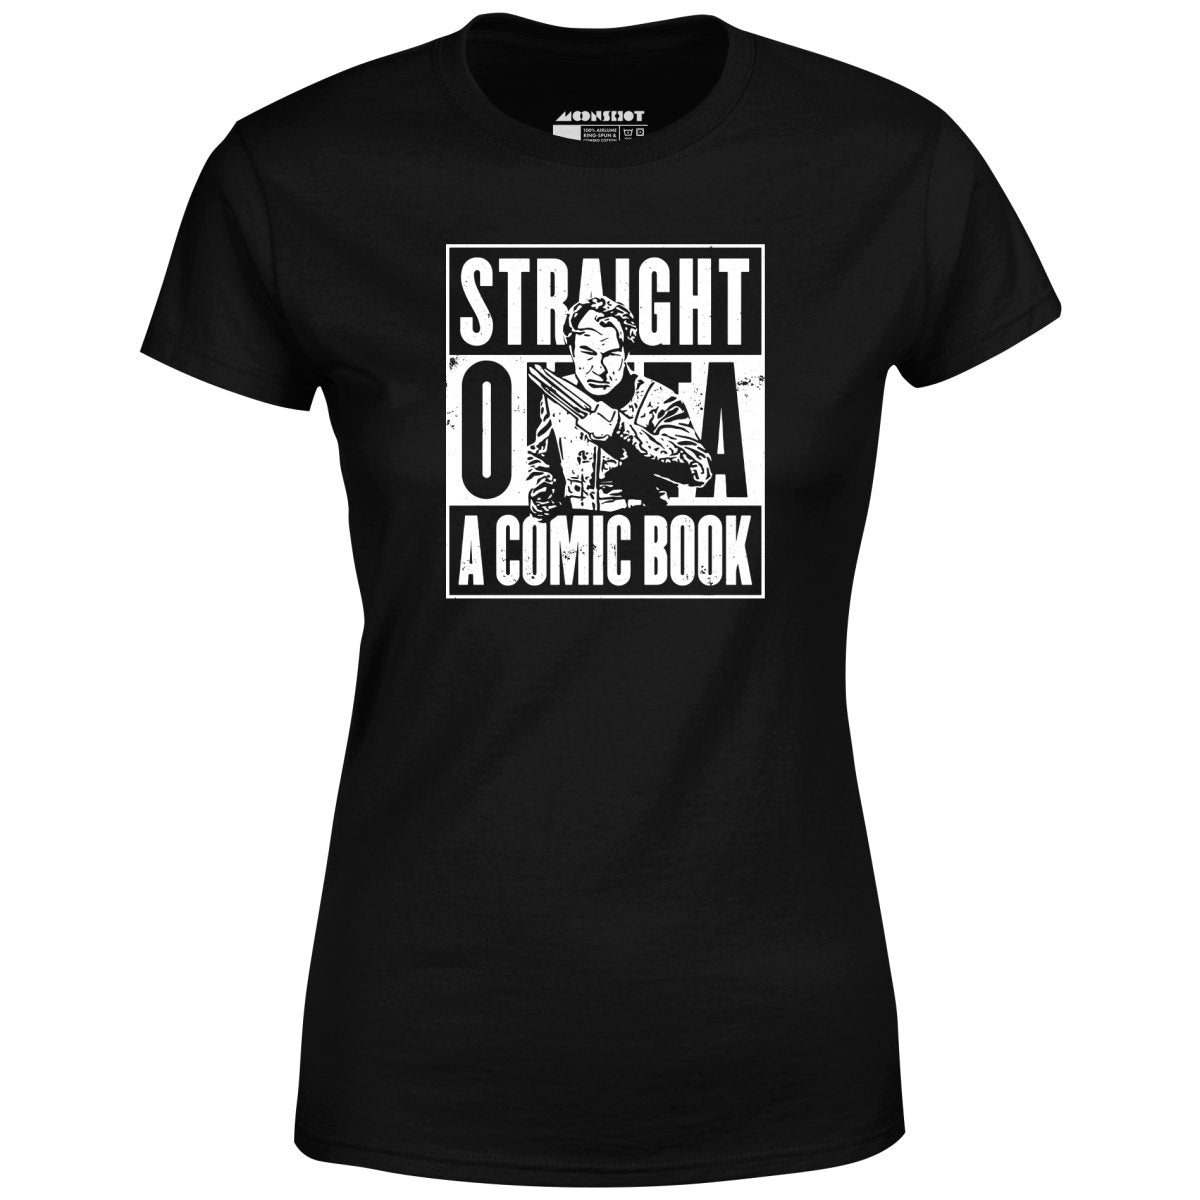 Straight Outta a Comic Book - Women's T-Shirt